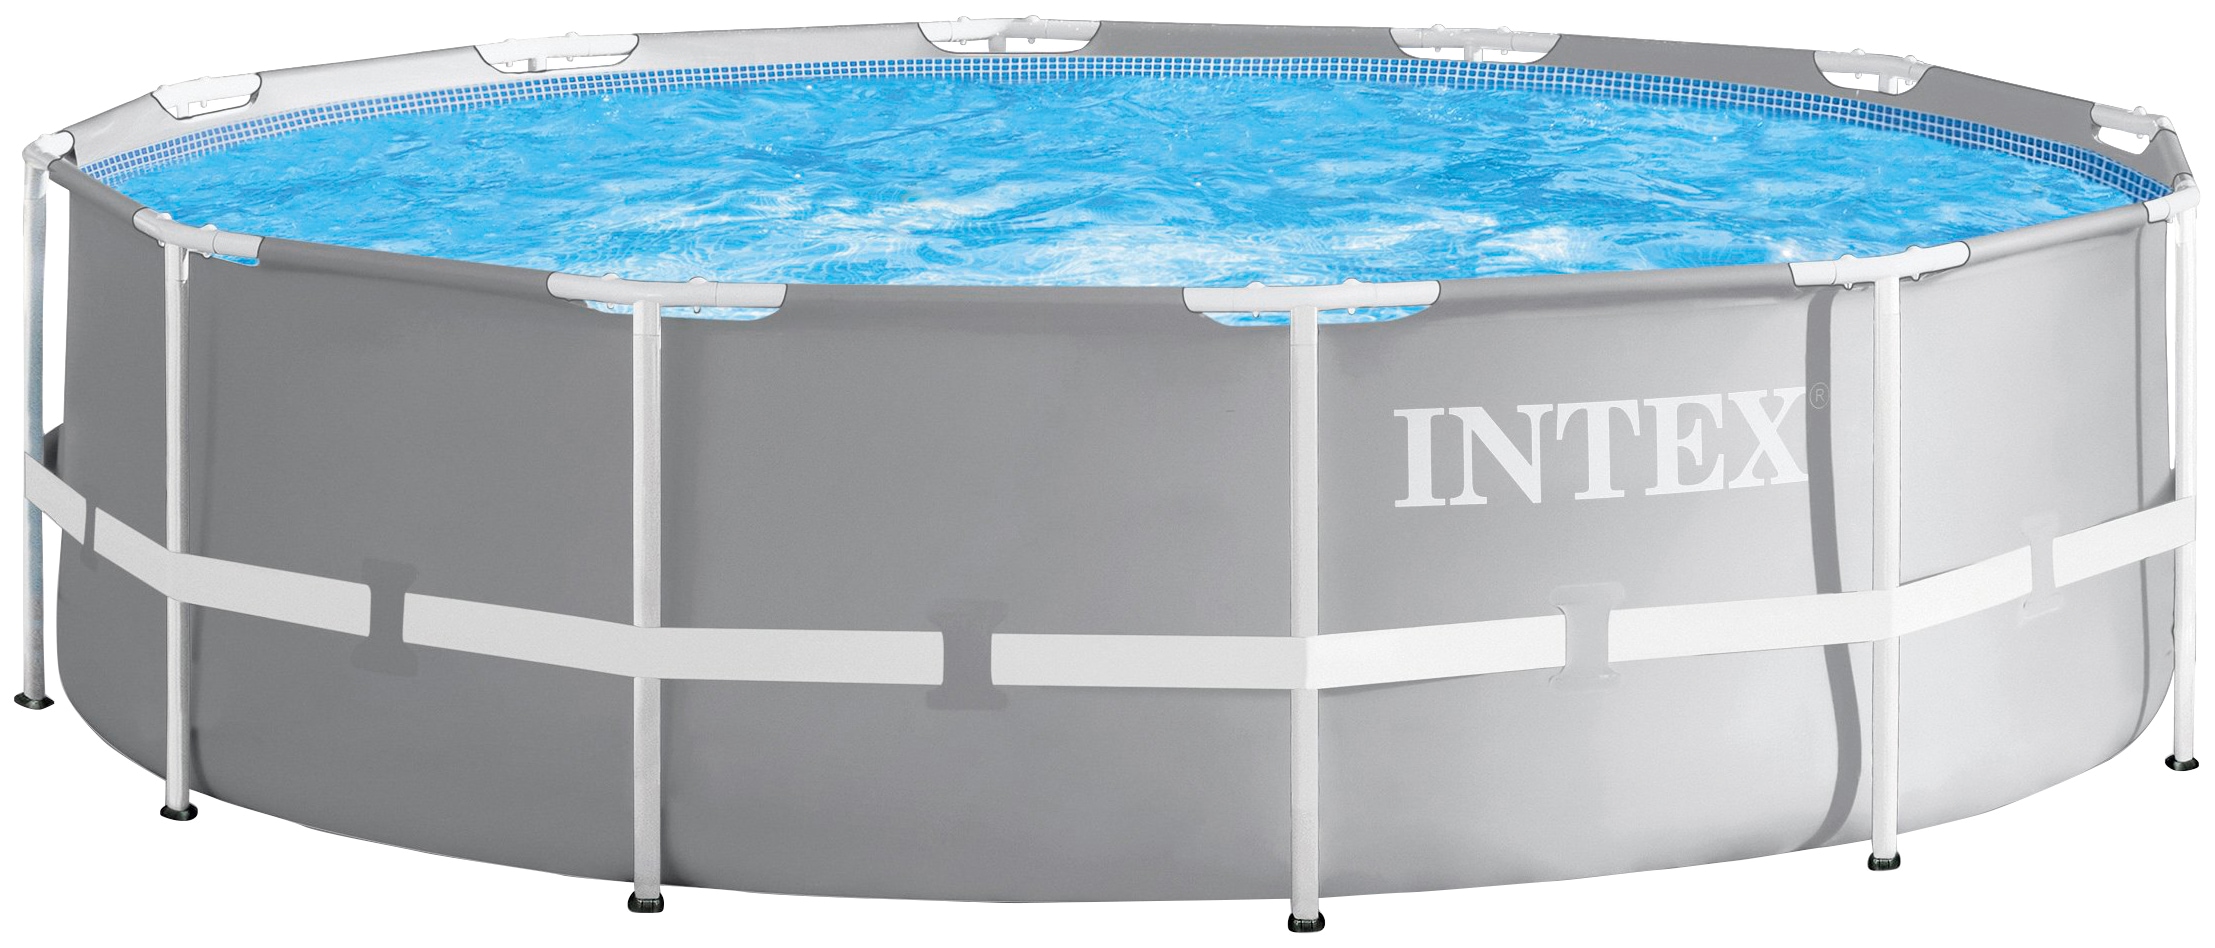 Intex Pool in Grau